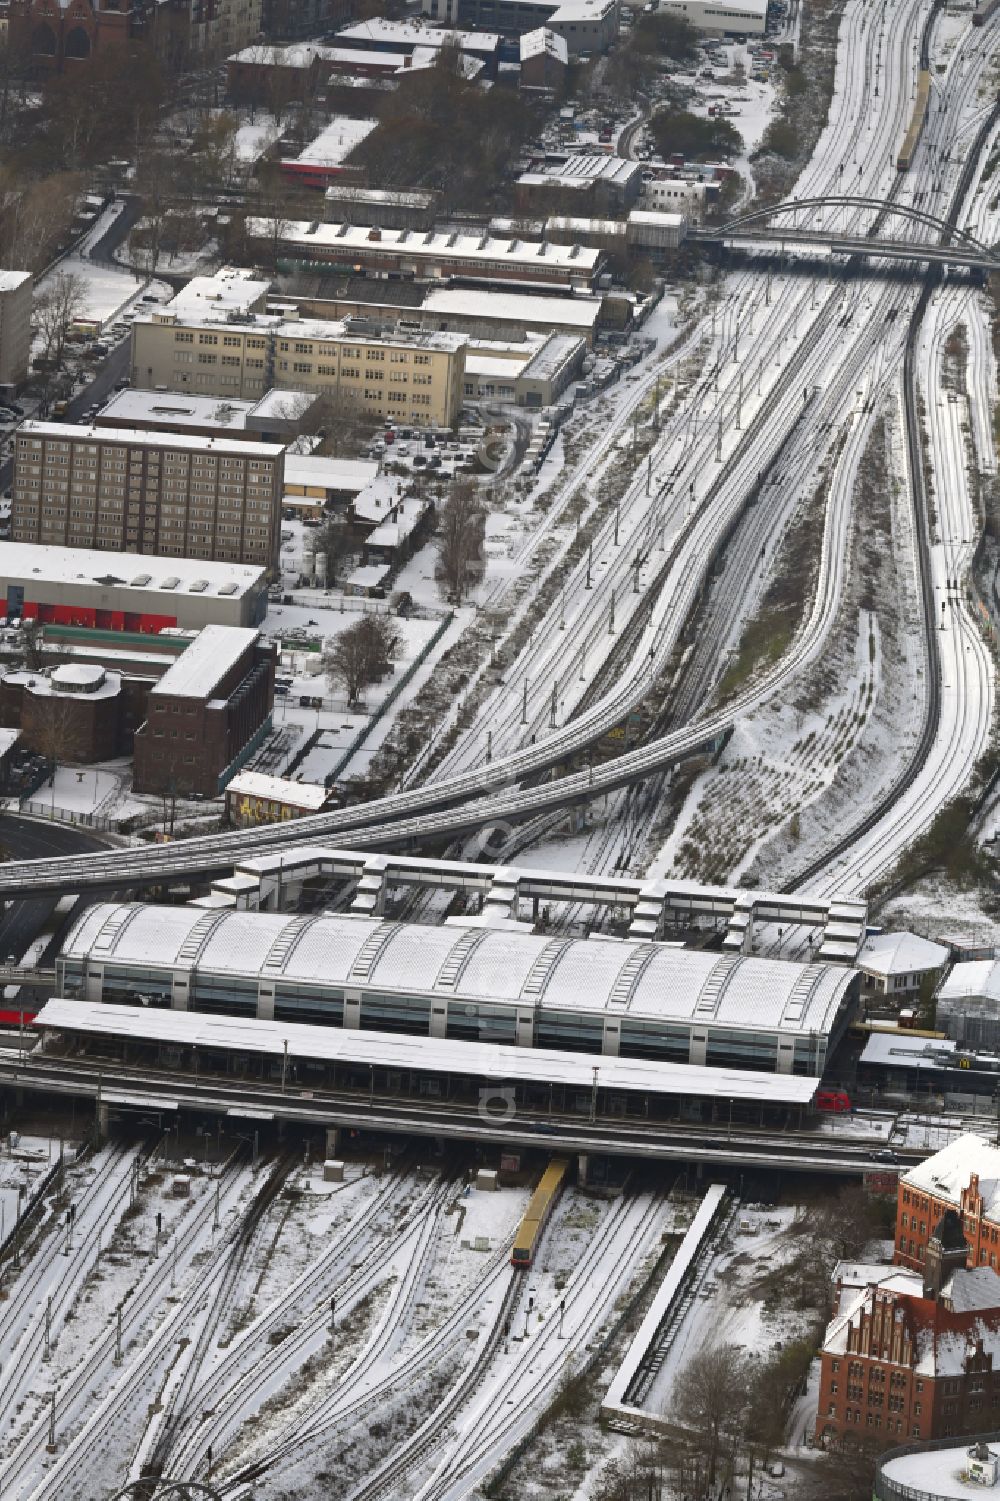 Aerial image Berlin - Wintry snowy route expansion station -Warschauer road to east cross rail station Ostkreuz Friedrichshain district of Berlin